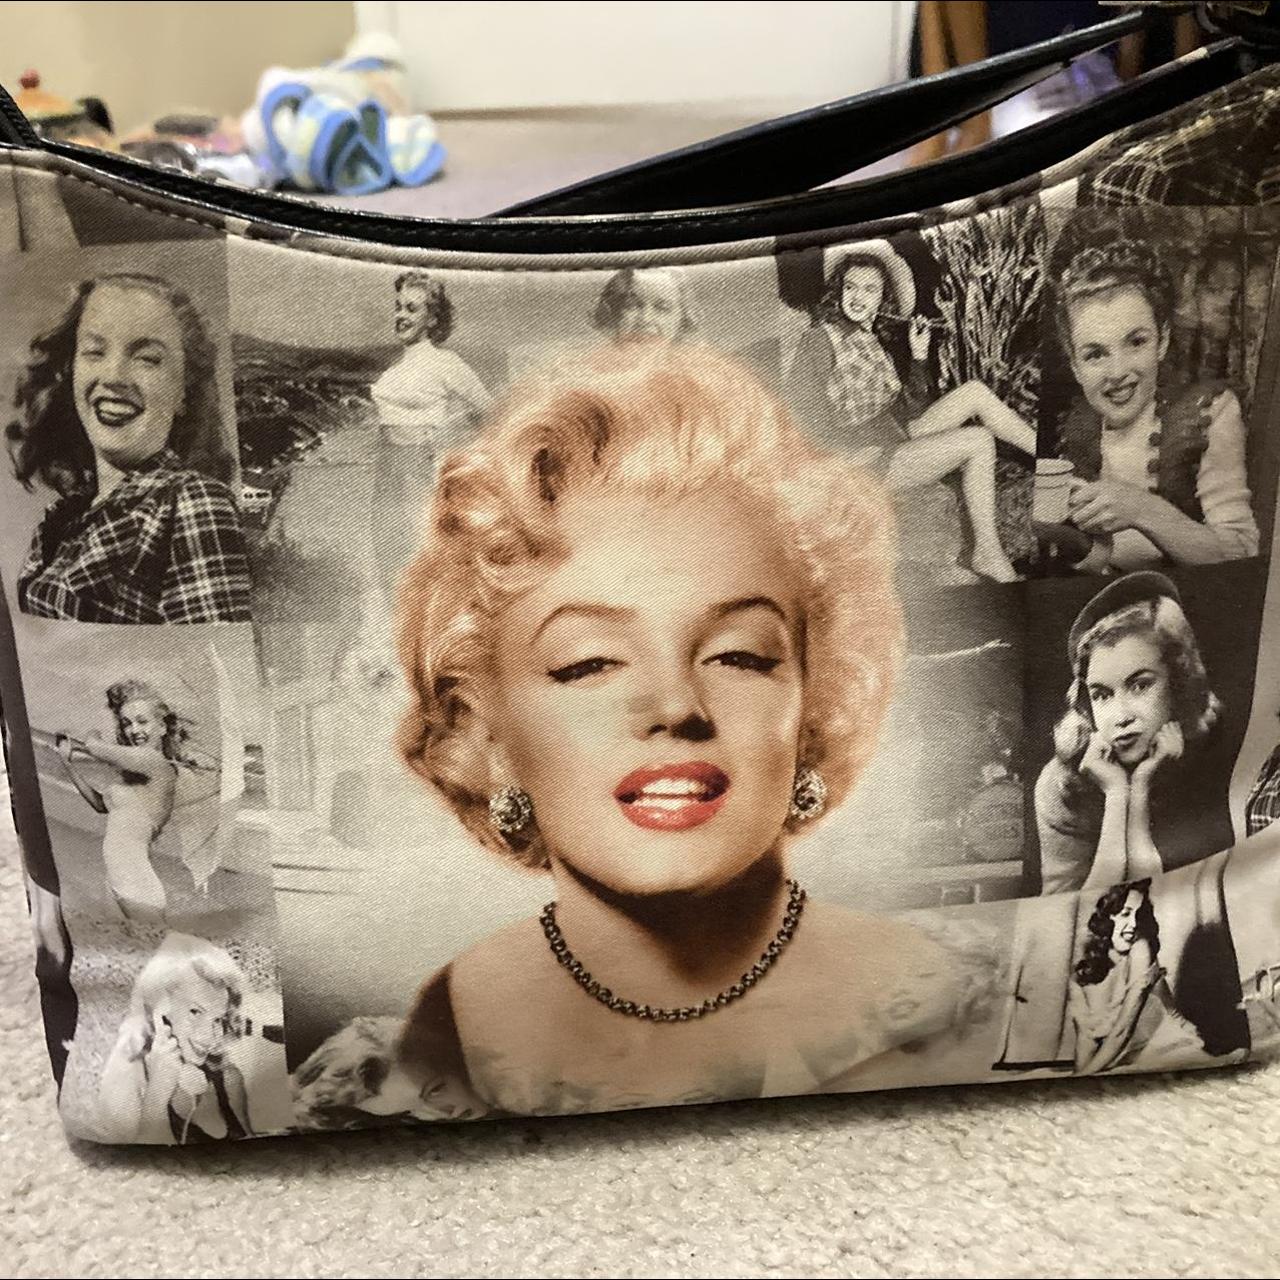 Brand new vintage authentic MARILYN MONROE handbag - Depop